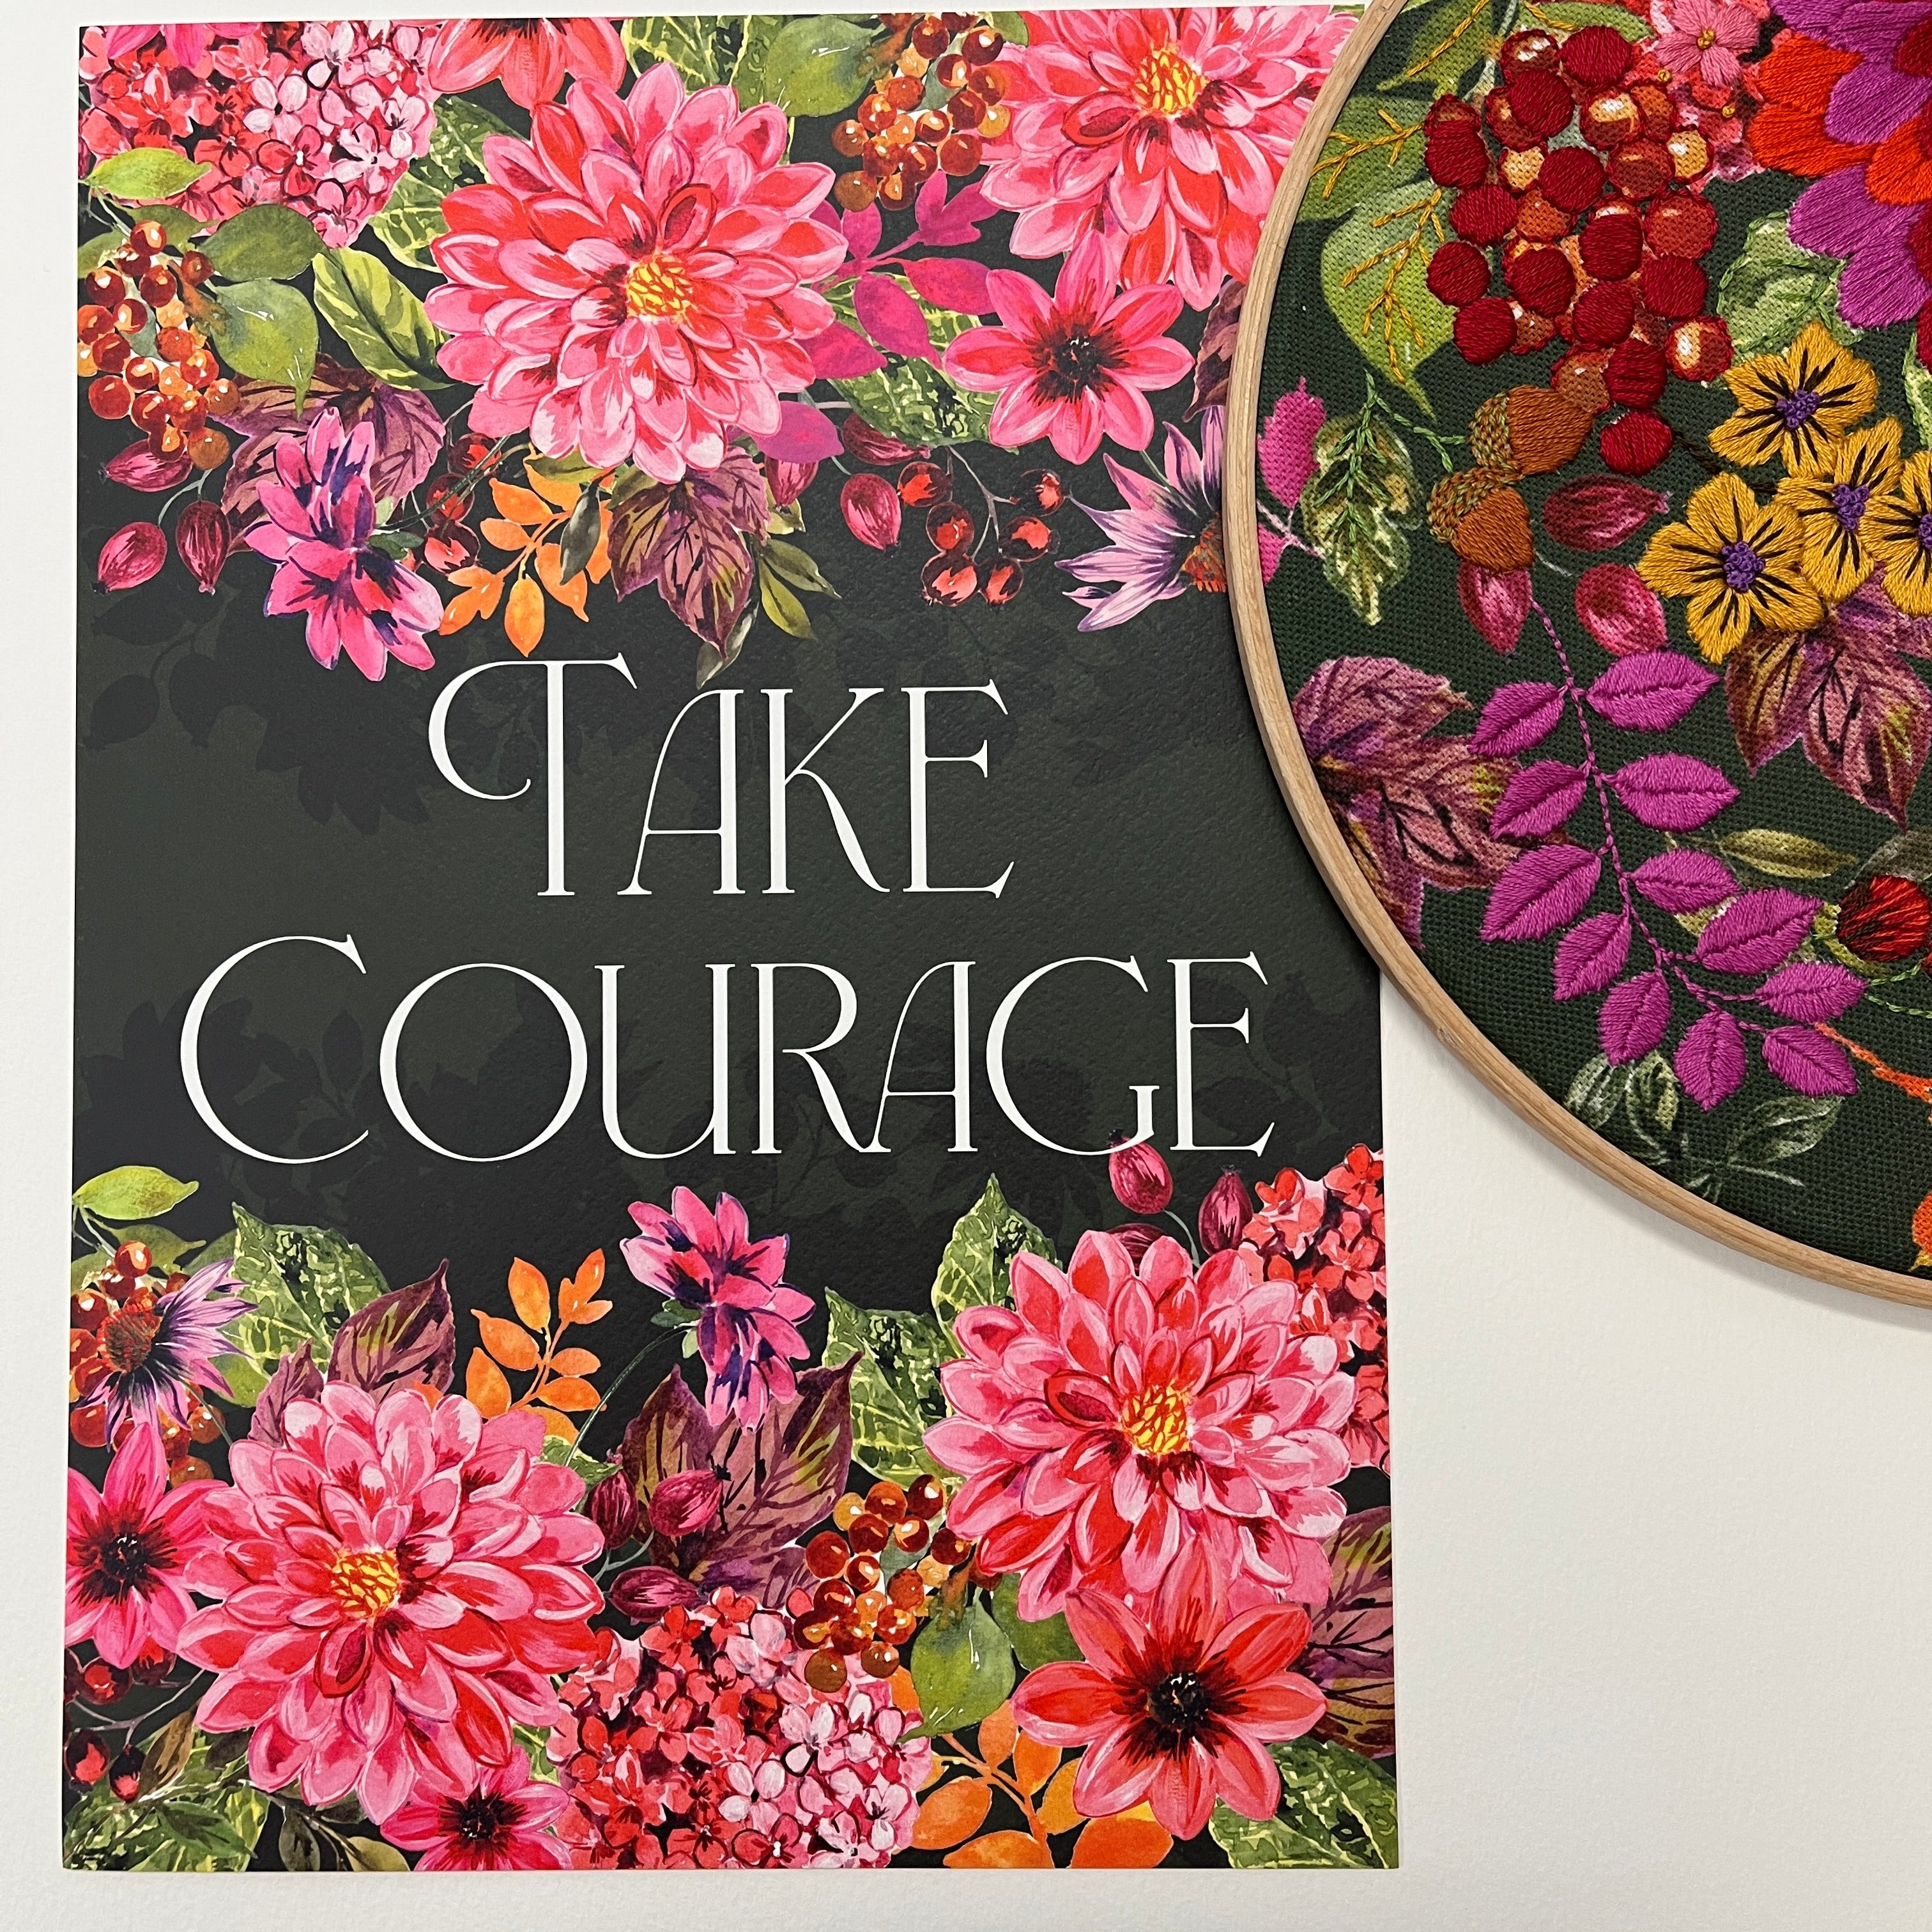 NEW** Take Courage fundraiser art print.